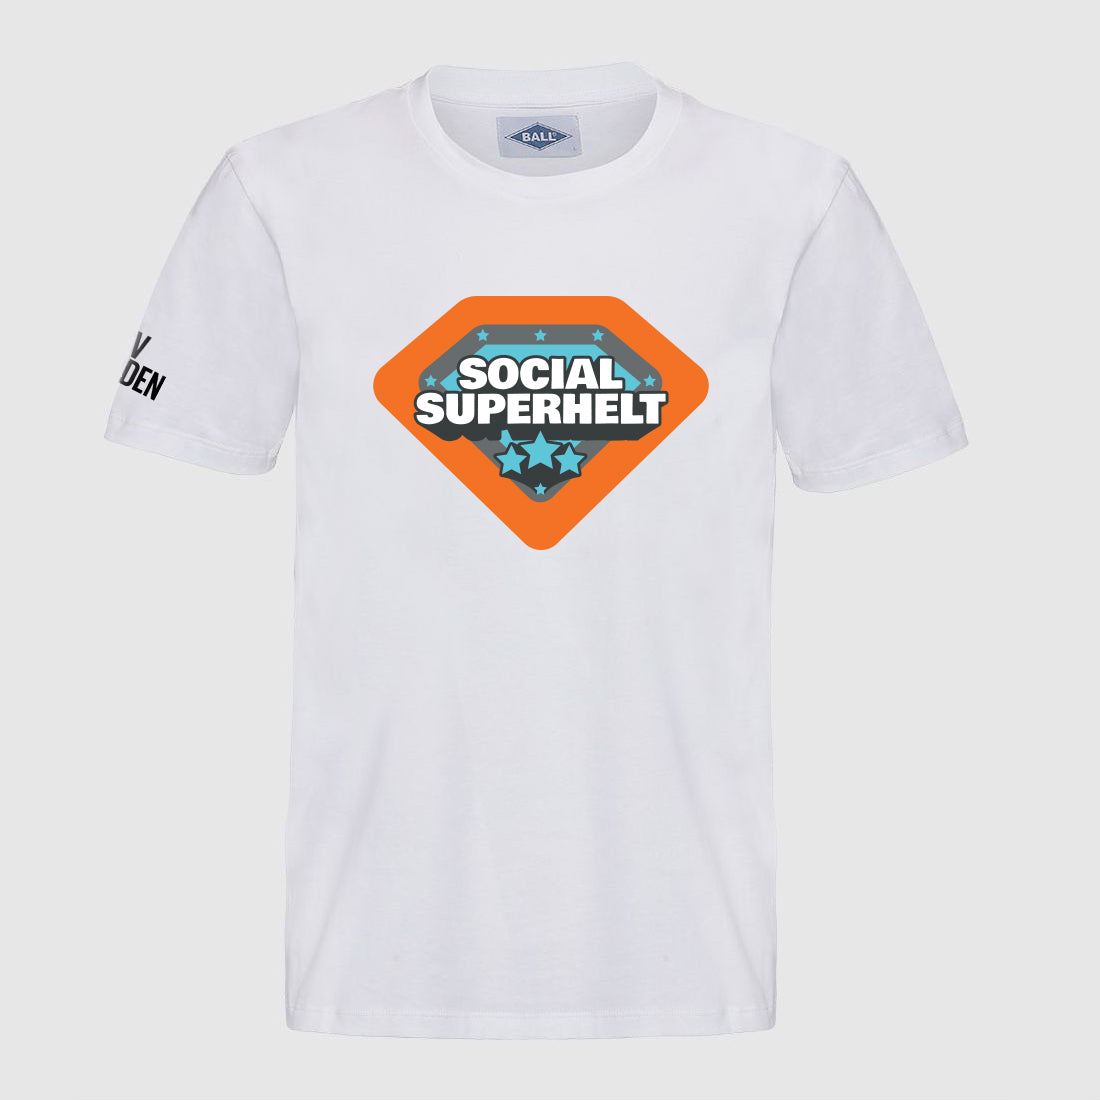 Social Superhelt t-shirt WOMAN